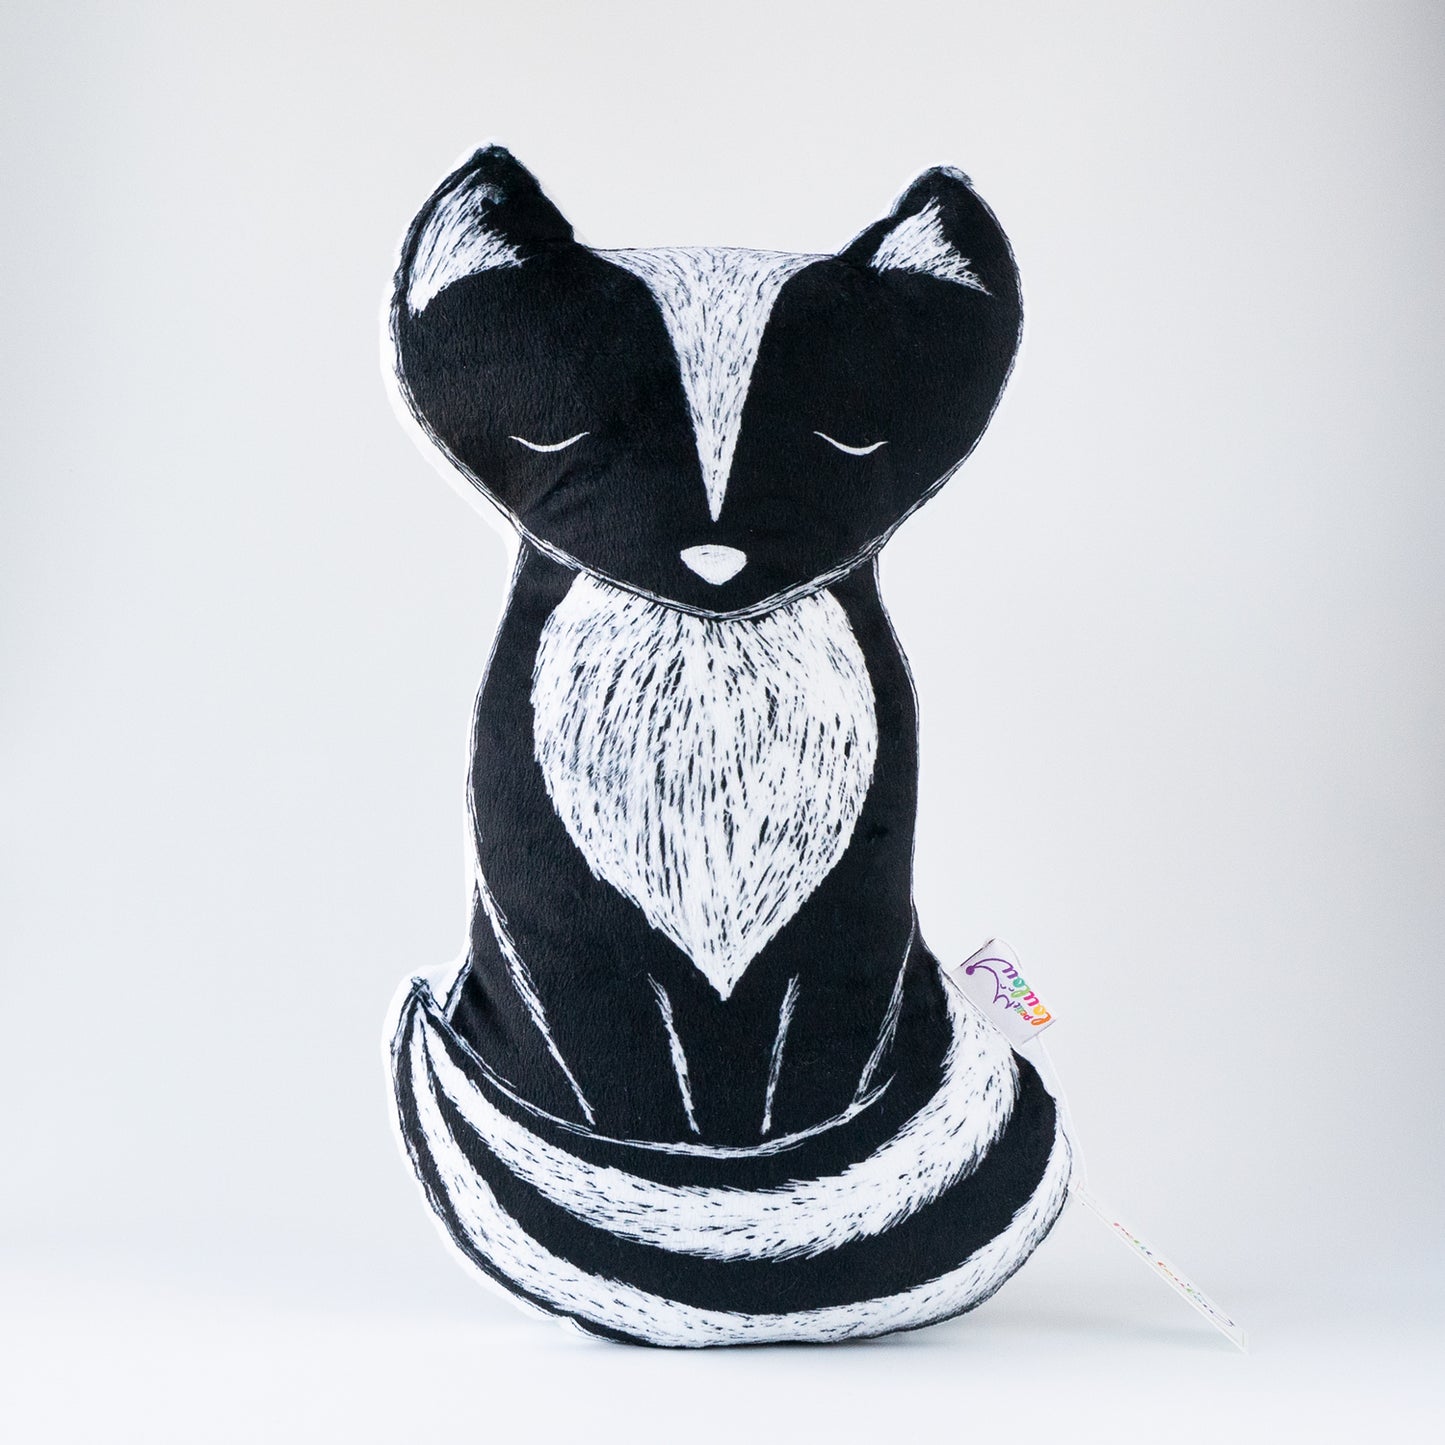 Decorative pillow - Cali, the skunk pillow